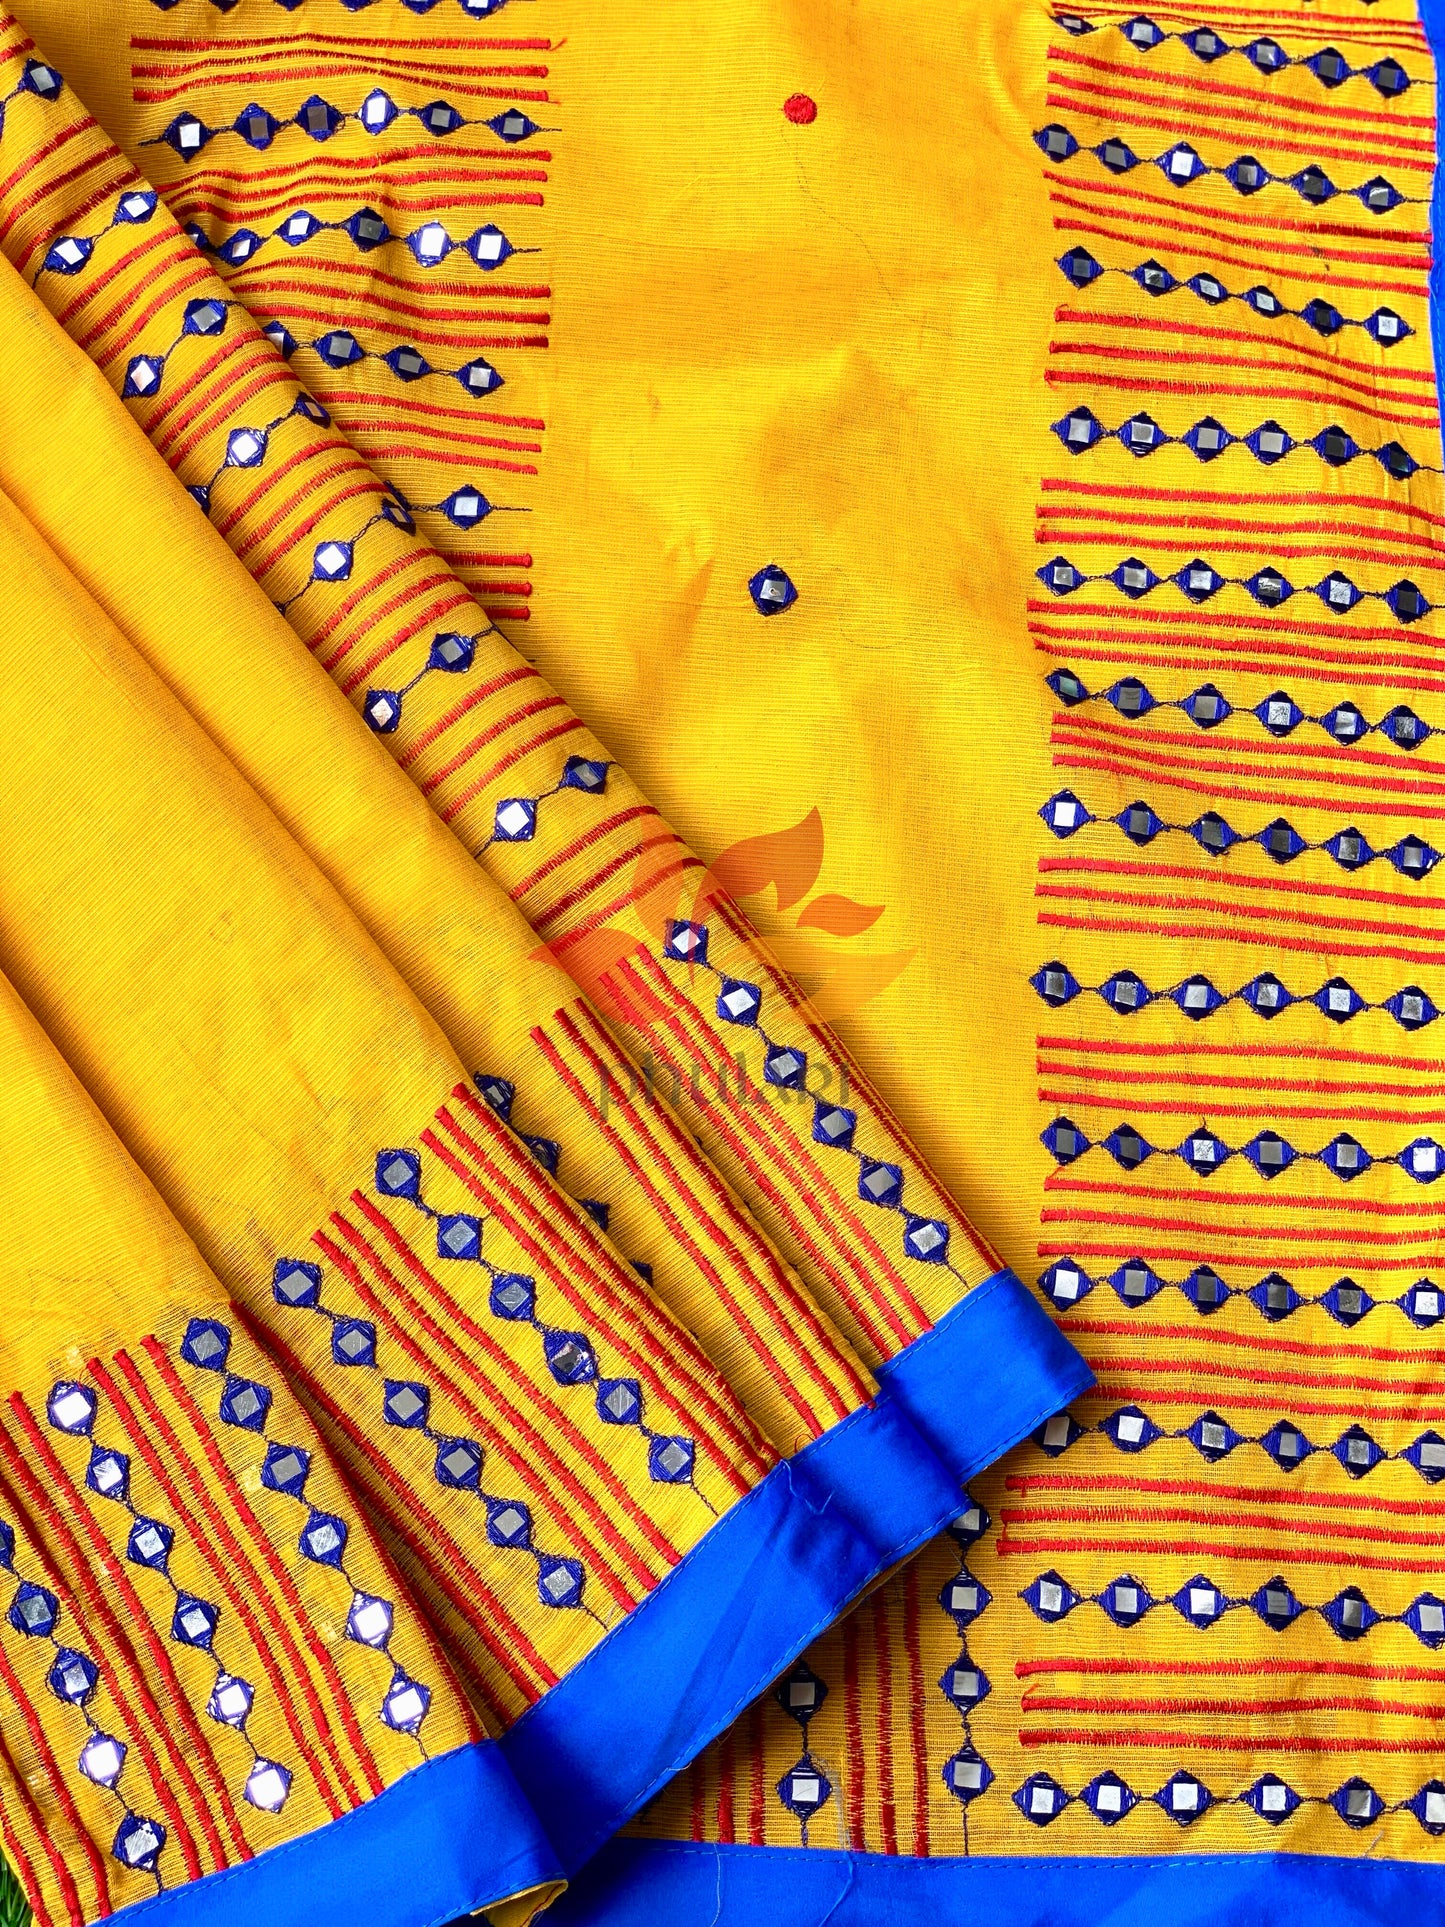 Bangladeshi Tant Saree Embroidery Foil Mirror Work - Yellow Blue - Phulari 